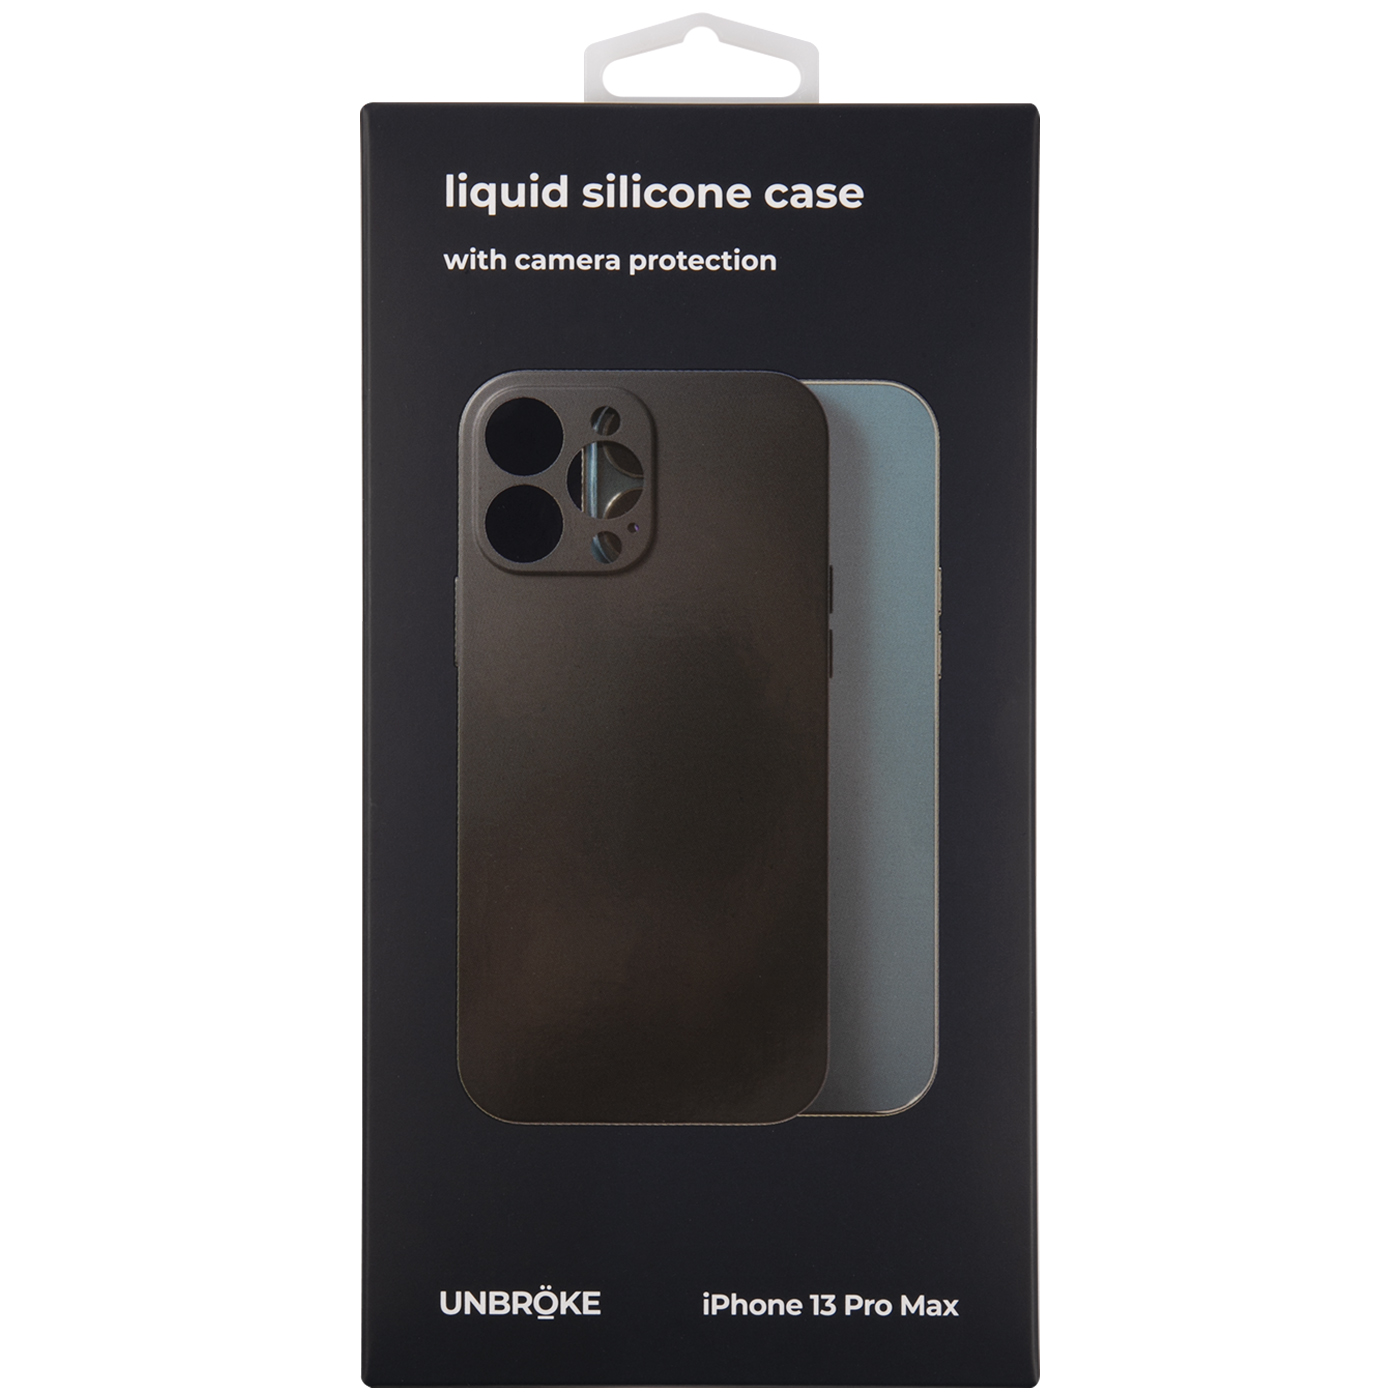 Чехол накладка UNBROKE liquid silicone case MagSafe support для iPhone 13 Pro Max, черная